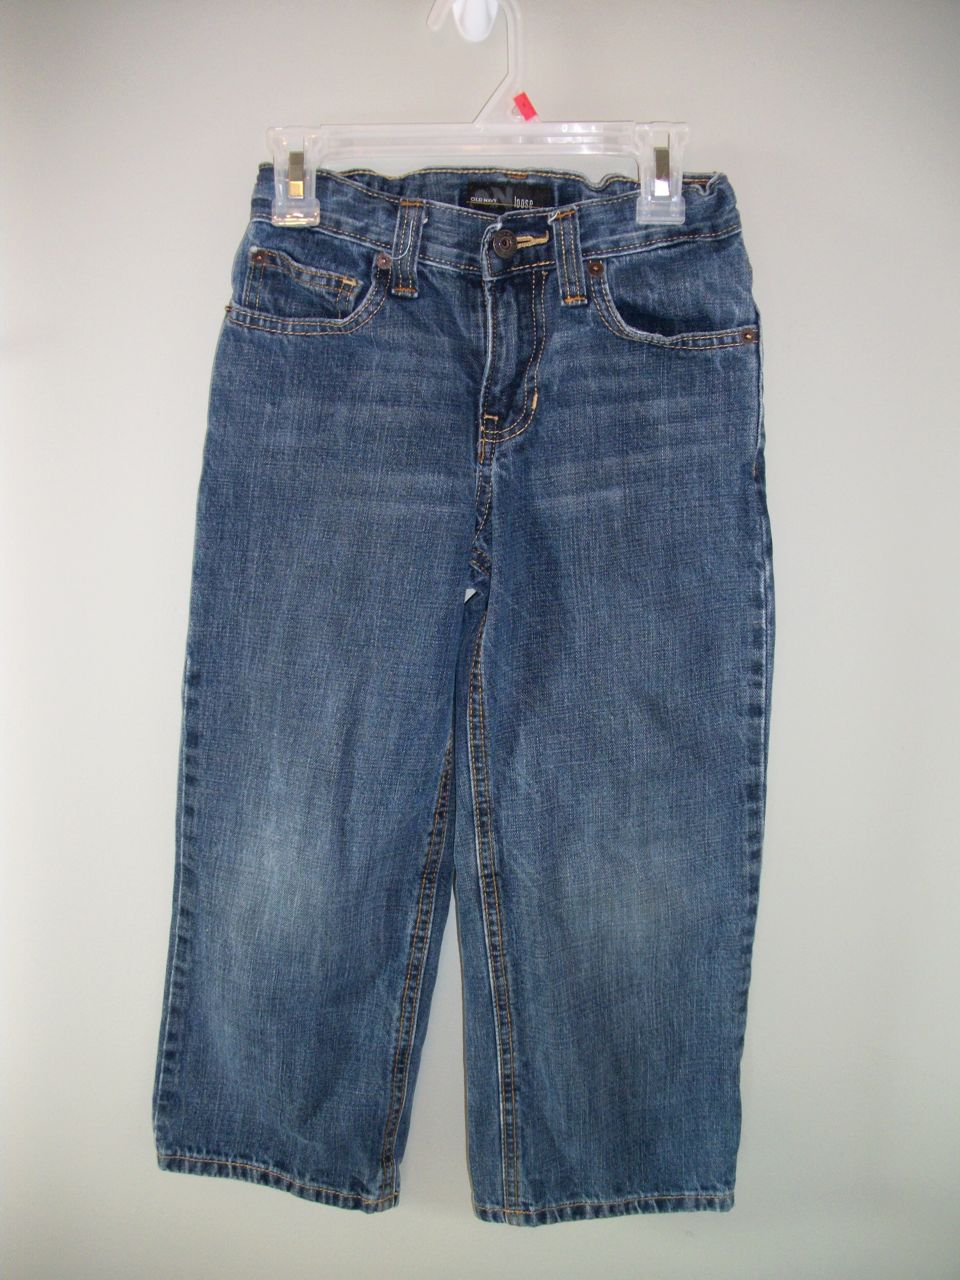 Virtual Yard Sale: BOYS Size 6 Blue Jeans